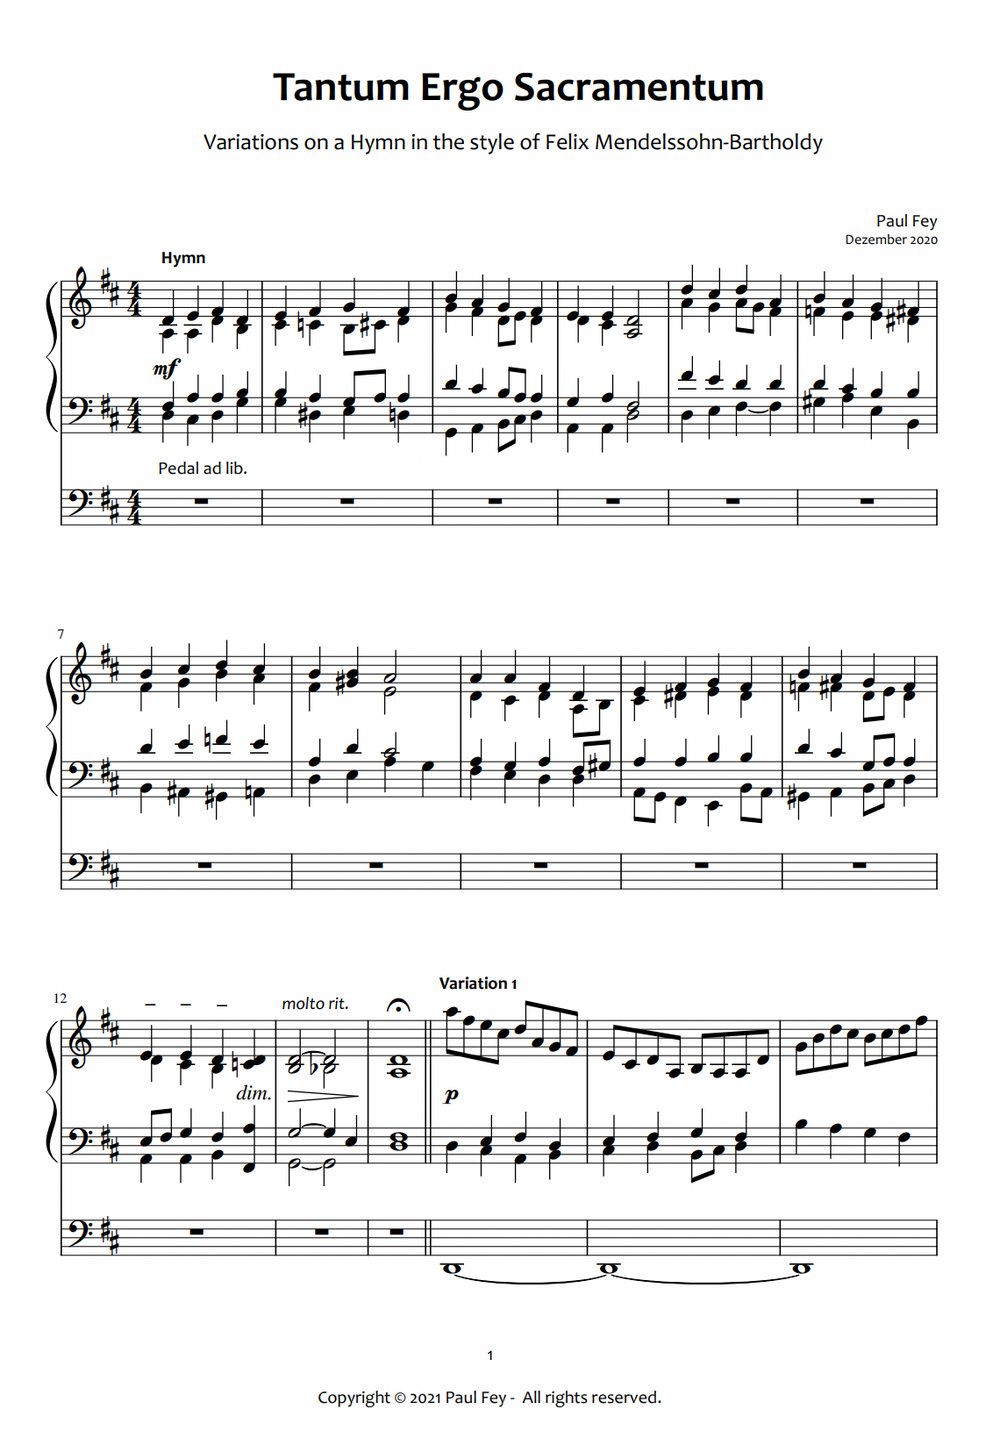 Variations on "Tantum Ergo Sacramentum" (Sheet Music) - Music for Pipe Organ by Paul Fey